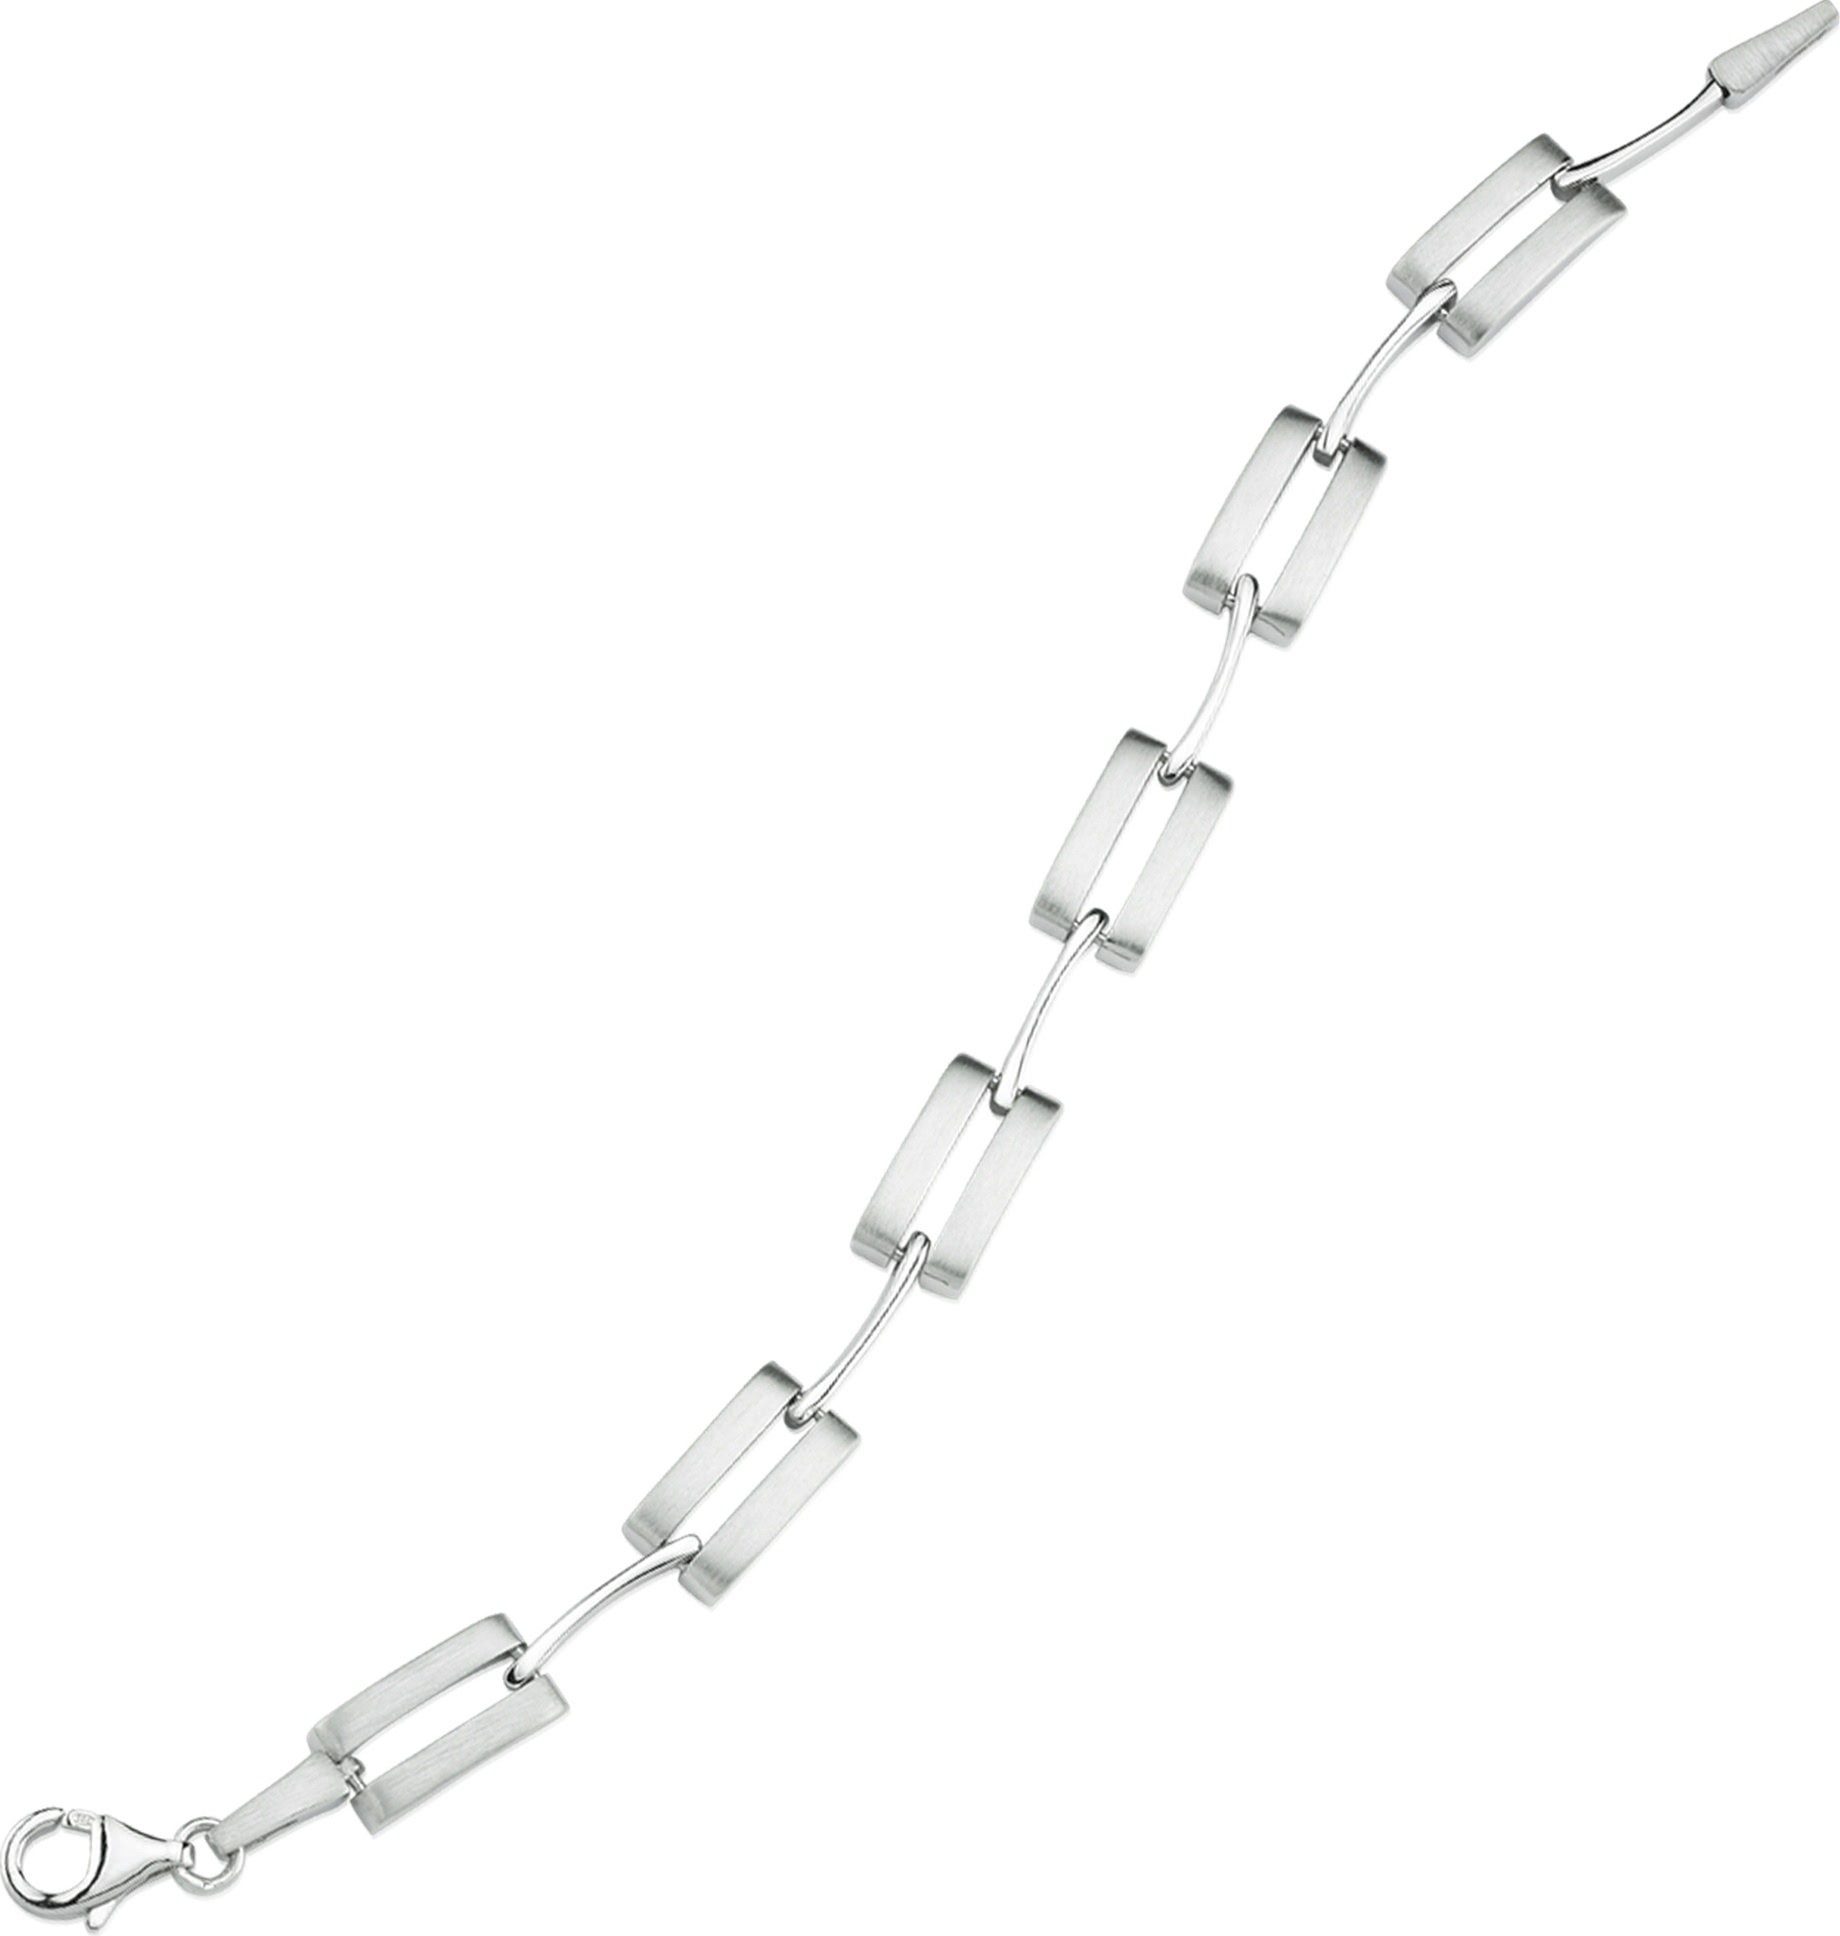 Balia Silberarmband Balia Armband für Damen mattiert glanz (Armband), Damen Armband (Kette) ca. 18,8cm, 925 Sterling Silber, Farbe: silber